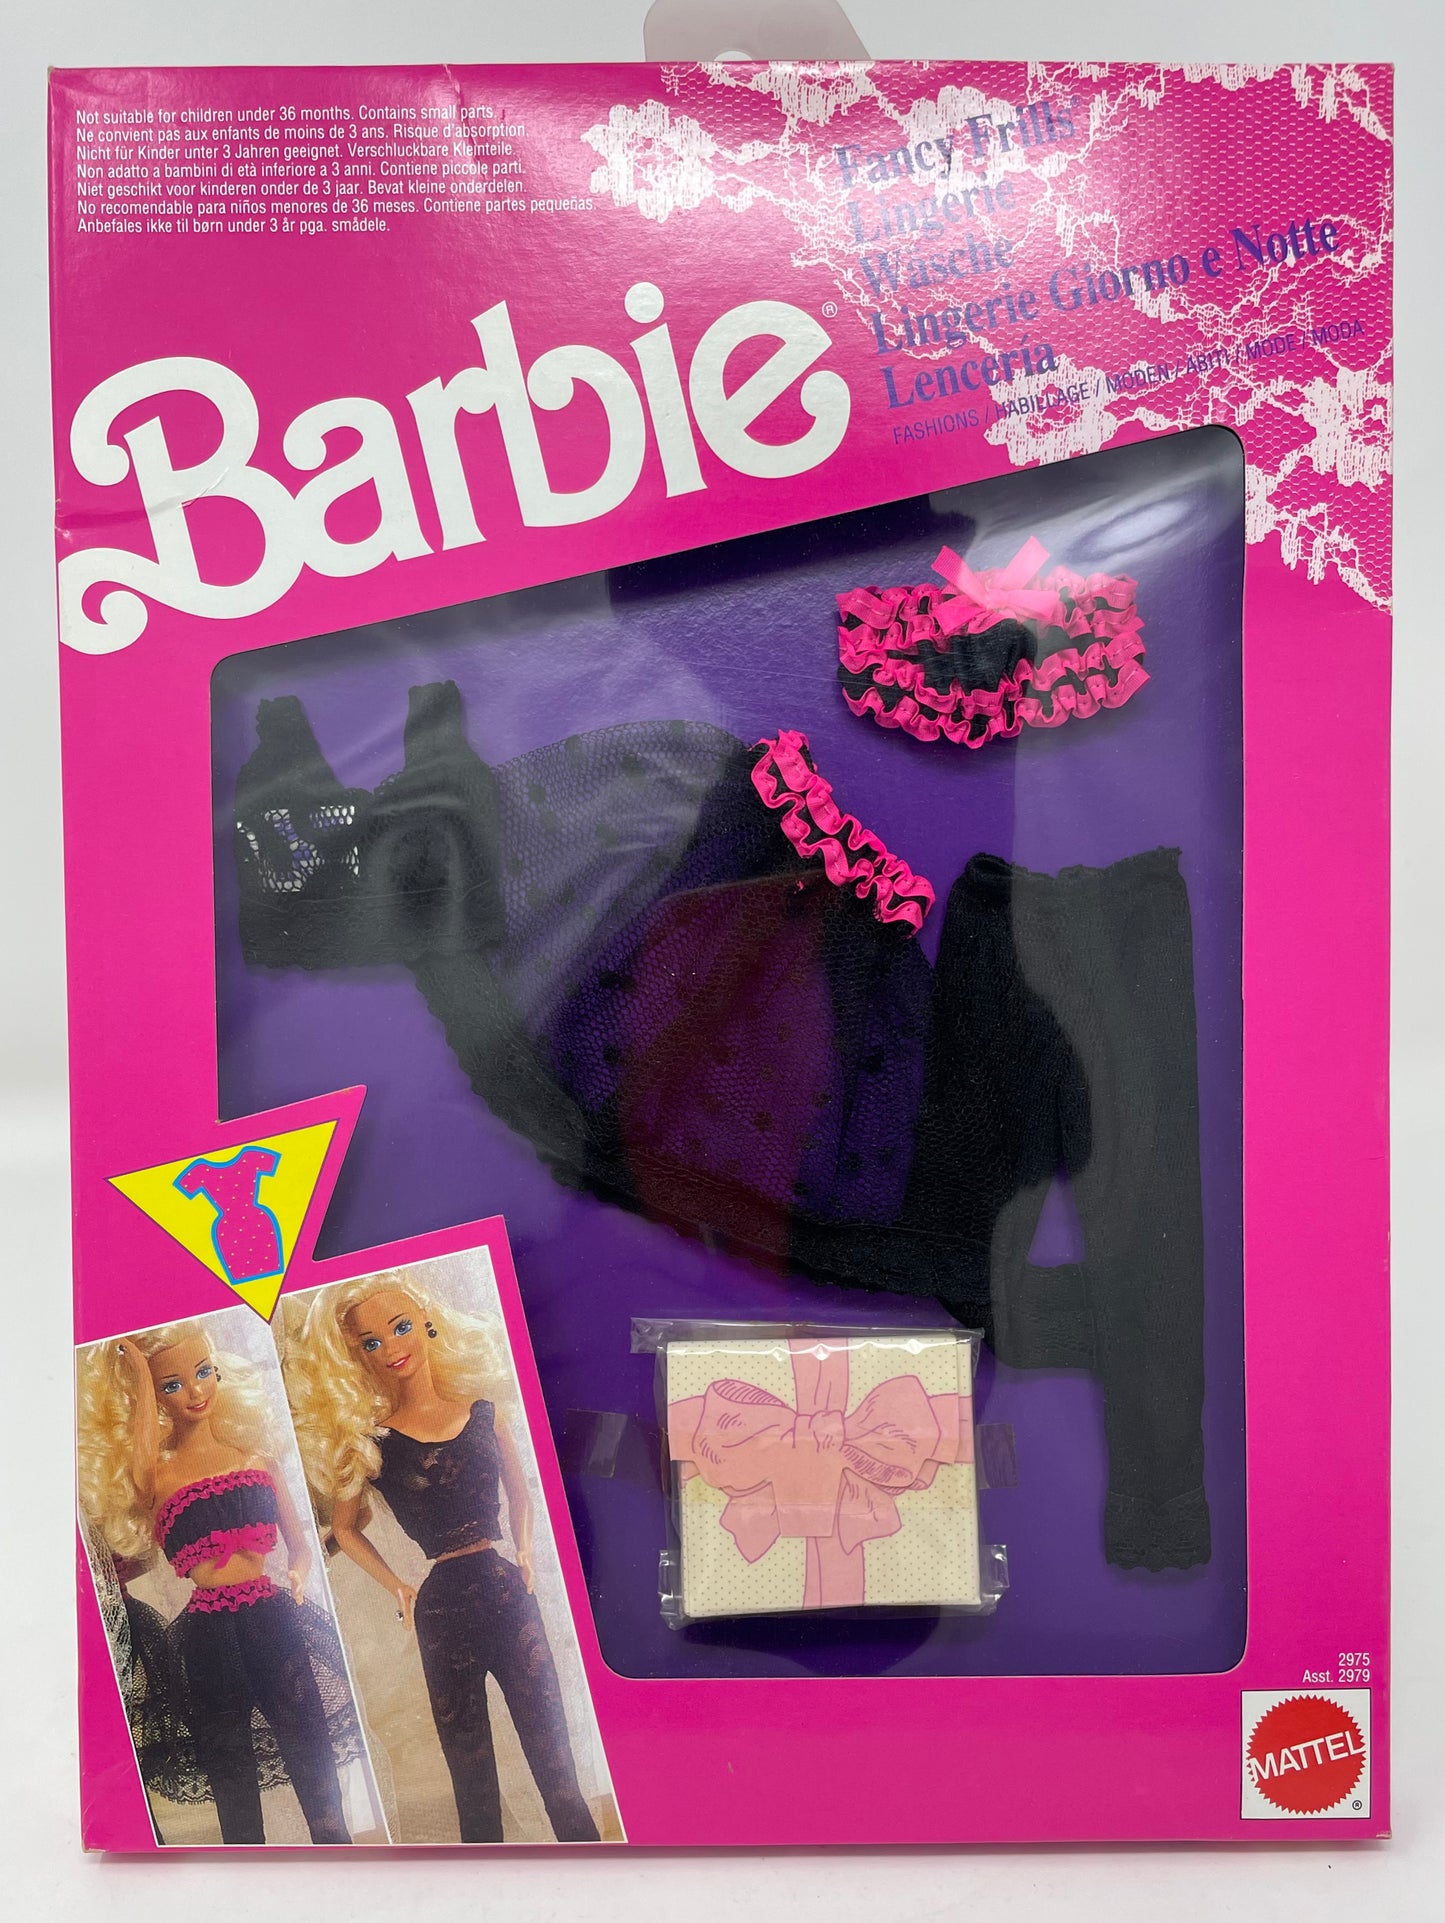 BARBIE - FANCY FRILLS FASHIONS - BLACK - TWO LINGERIE LOOKS - BOXED #2975 - MATTEL 1991